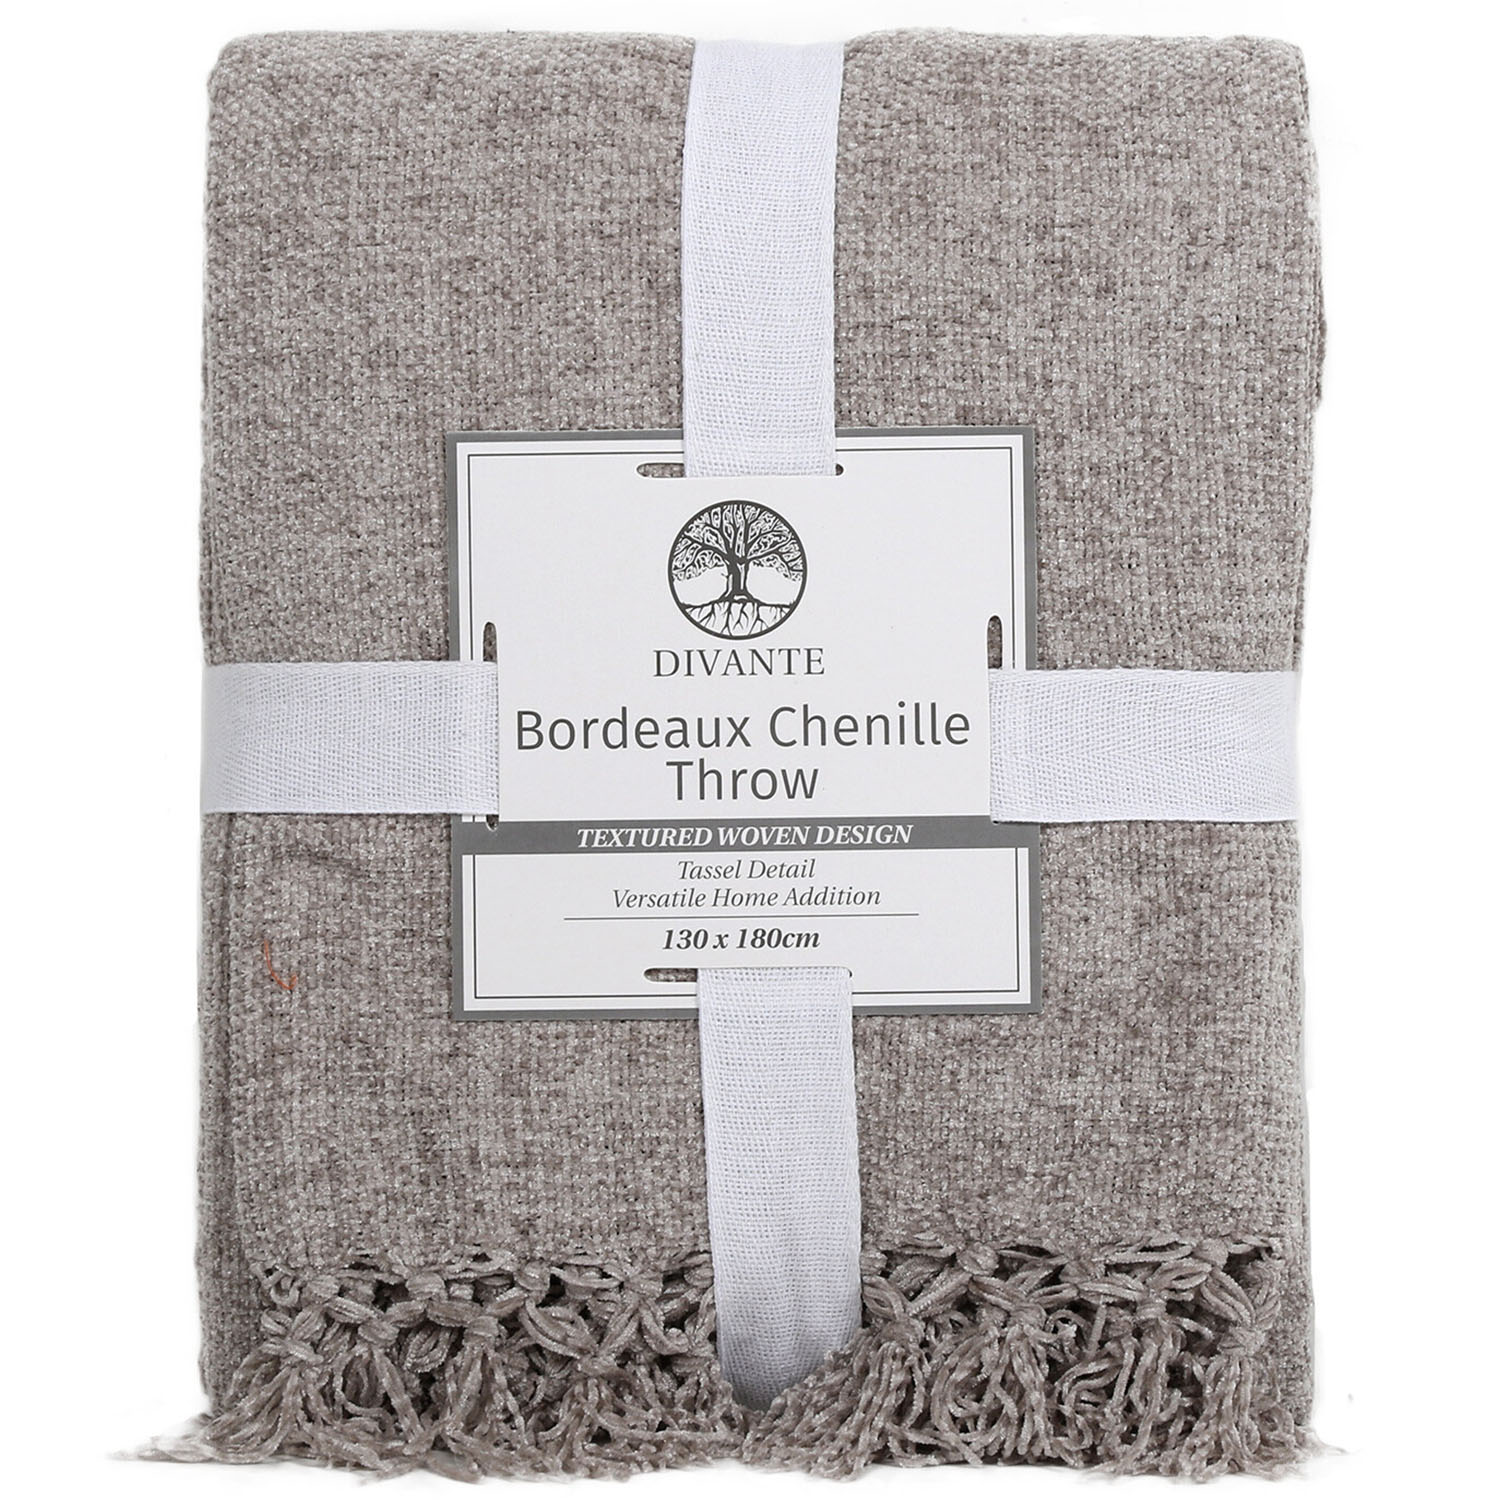 Divante Bordeaux Dove Grey Chenille Throw Image